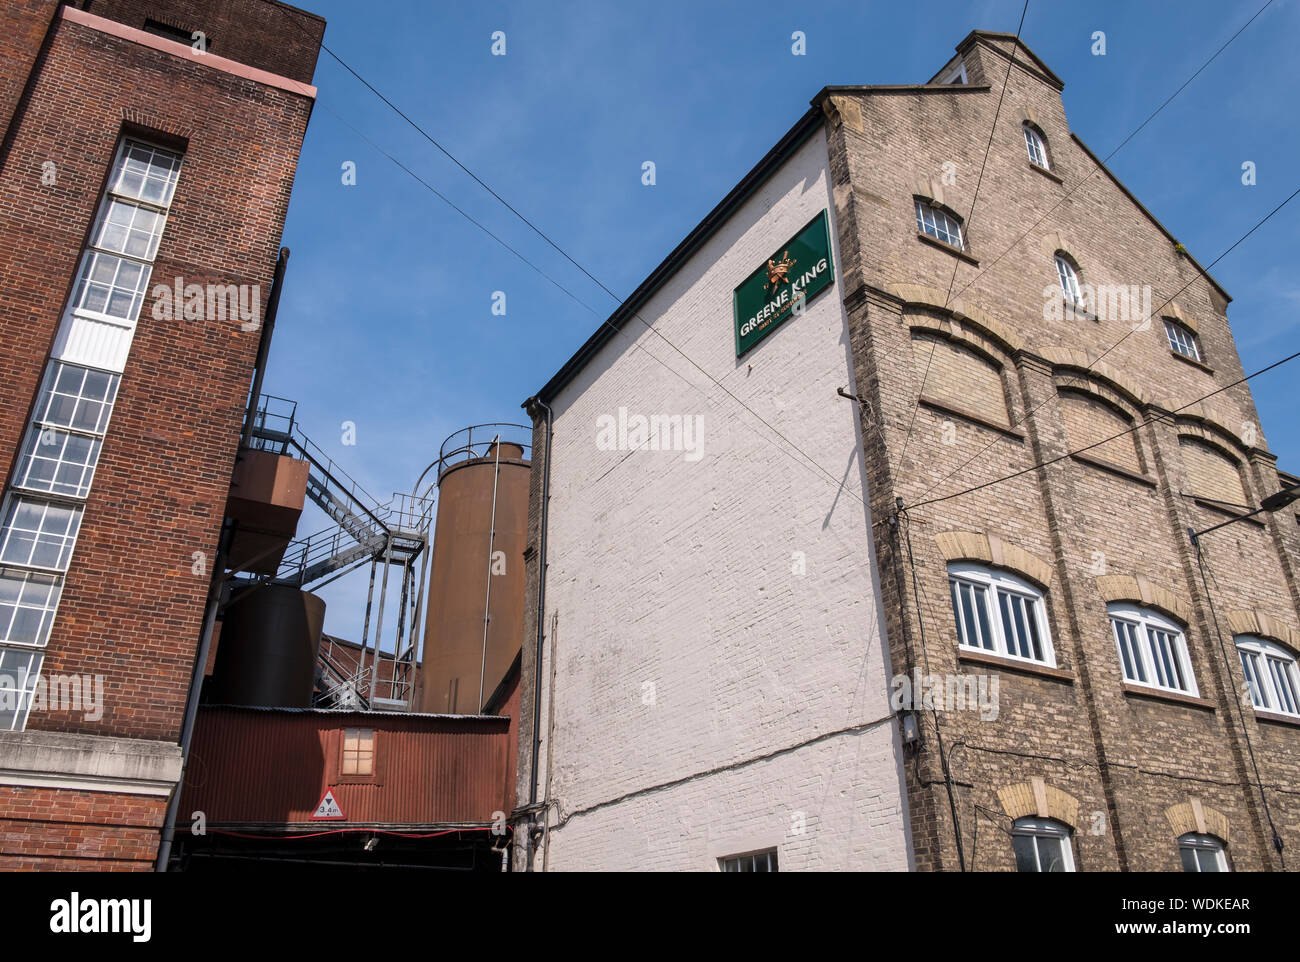 The Greene King brewery, Bury St Edmunds, Suffolk, UK. Stock Photo